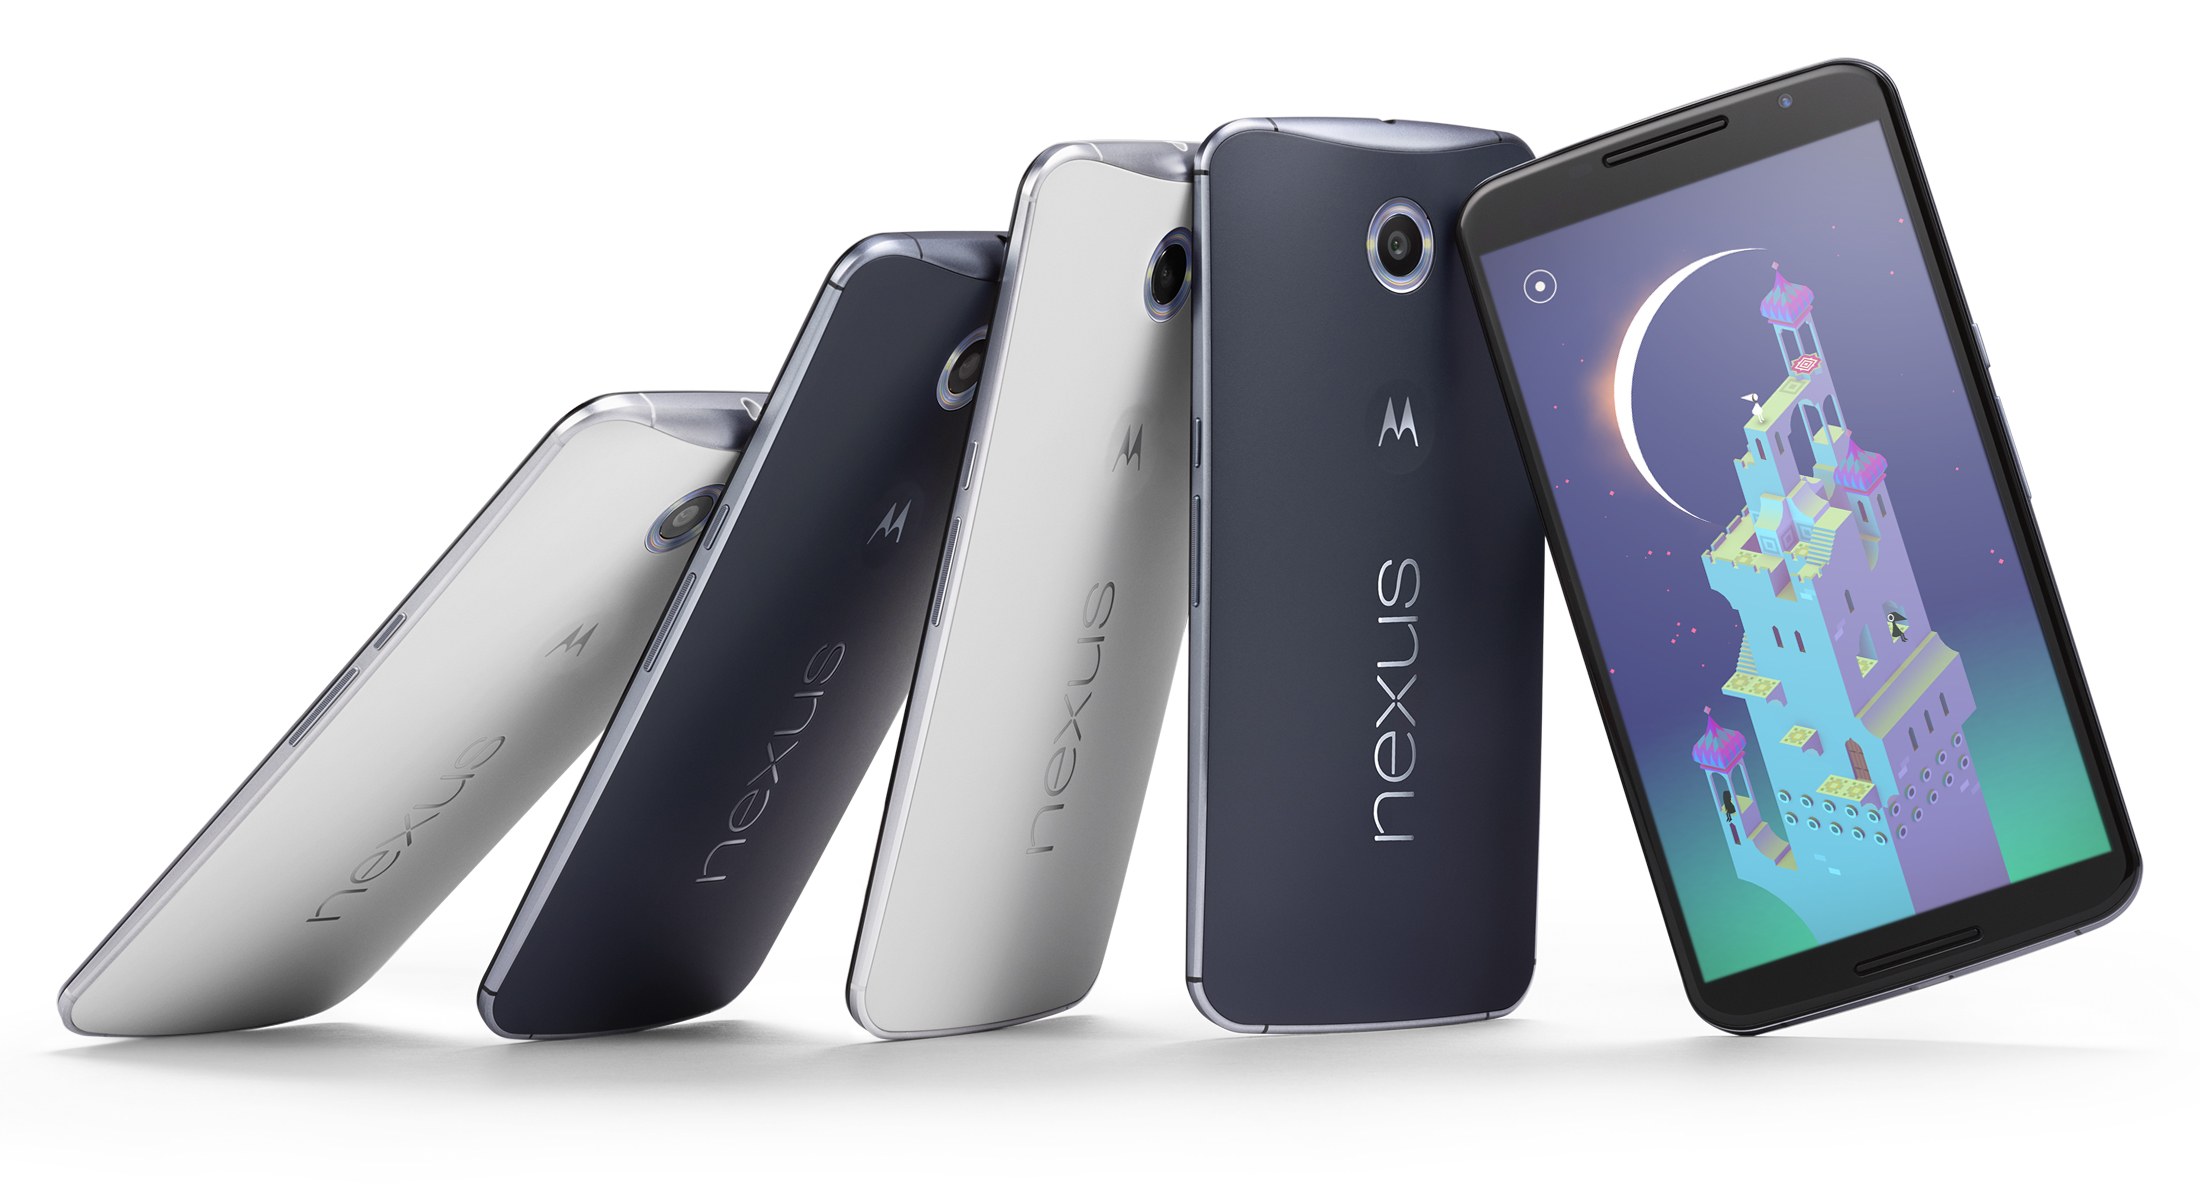 Google Nexus 6 review